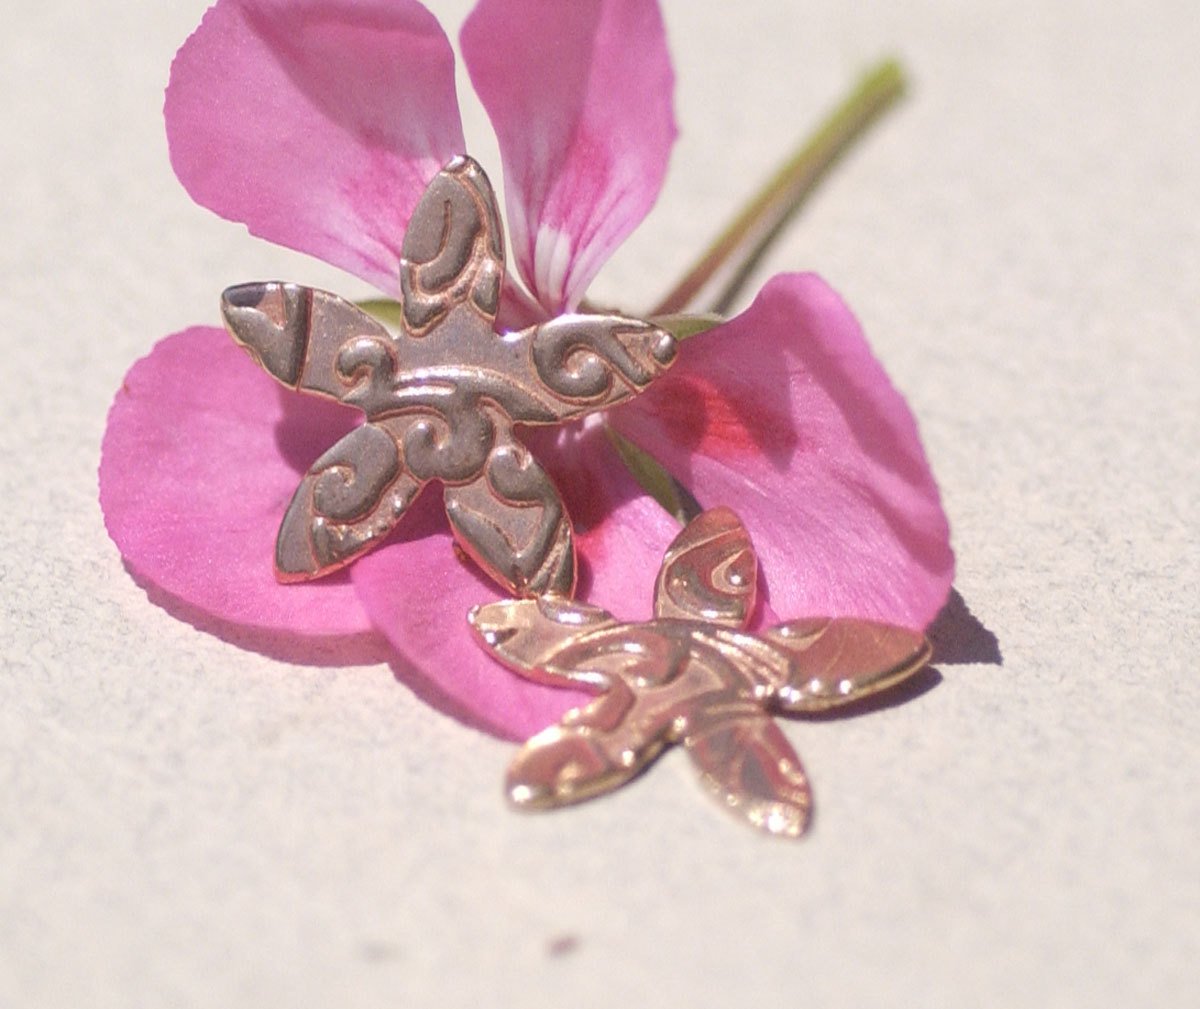 Lotus Flower Pattern Small 5 Petal Flower 20mm 20g for Blanks Enameling Stamping Texturing Variety Metals